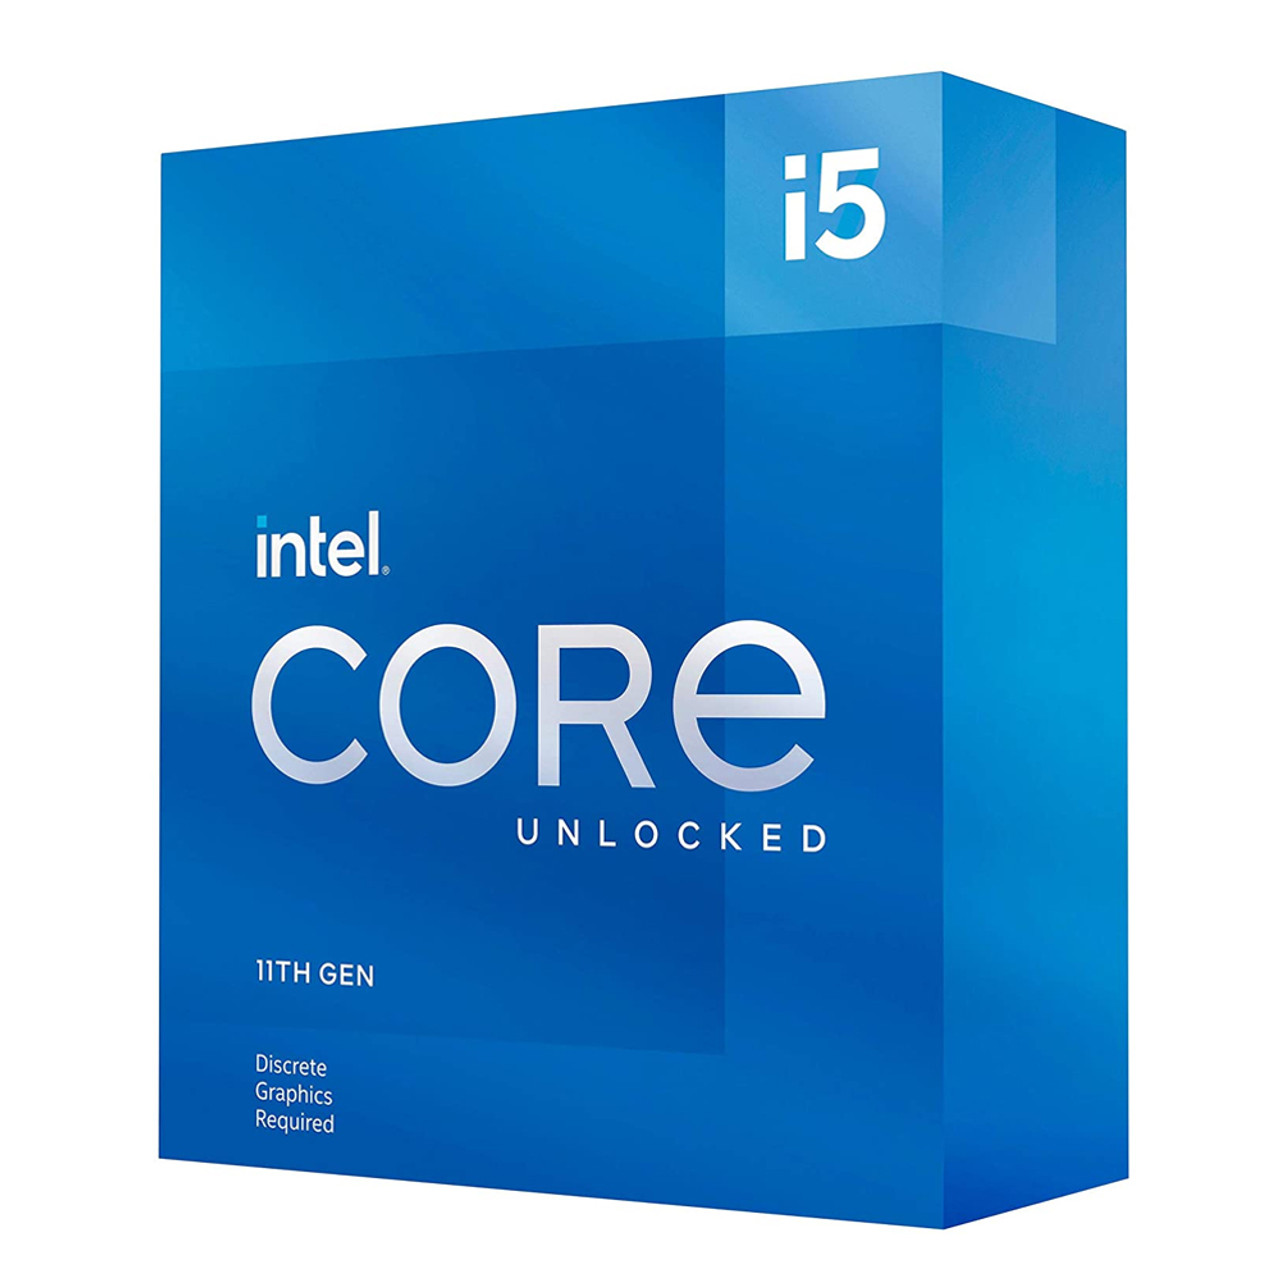 Intel Core i5-11600K Processor (11th Gen) 6-Core 3.9GHz LGA1200 125W Desktop CPU BX8070811600K